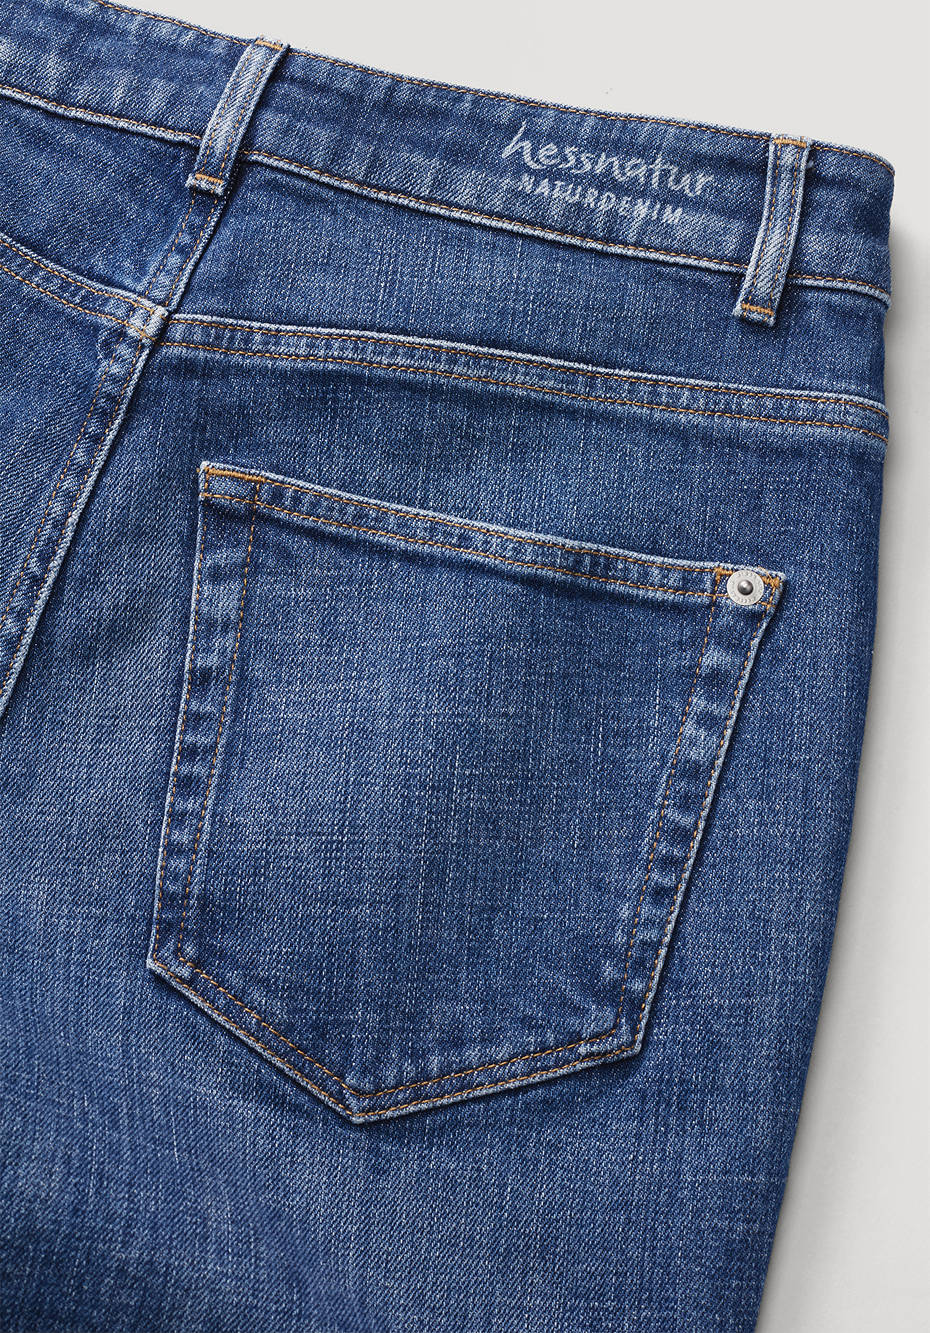 Hanna Mom Fit jeans made of organic denim